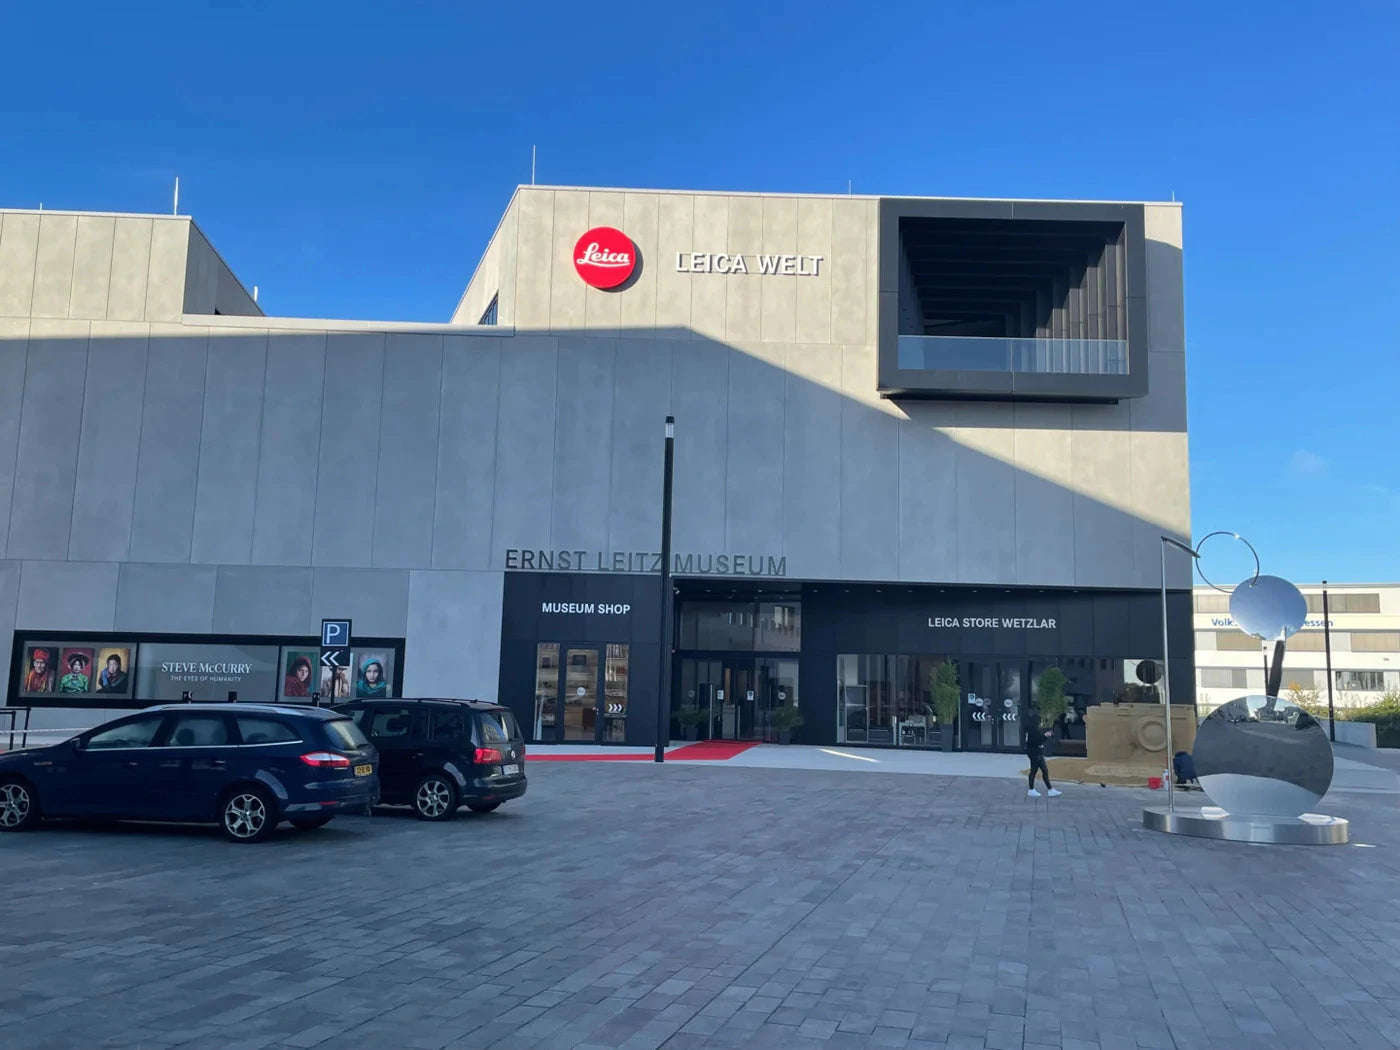 Ernst Leitz Museum celebrates reopening